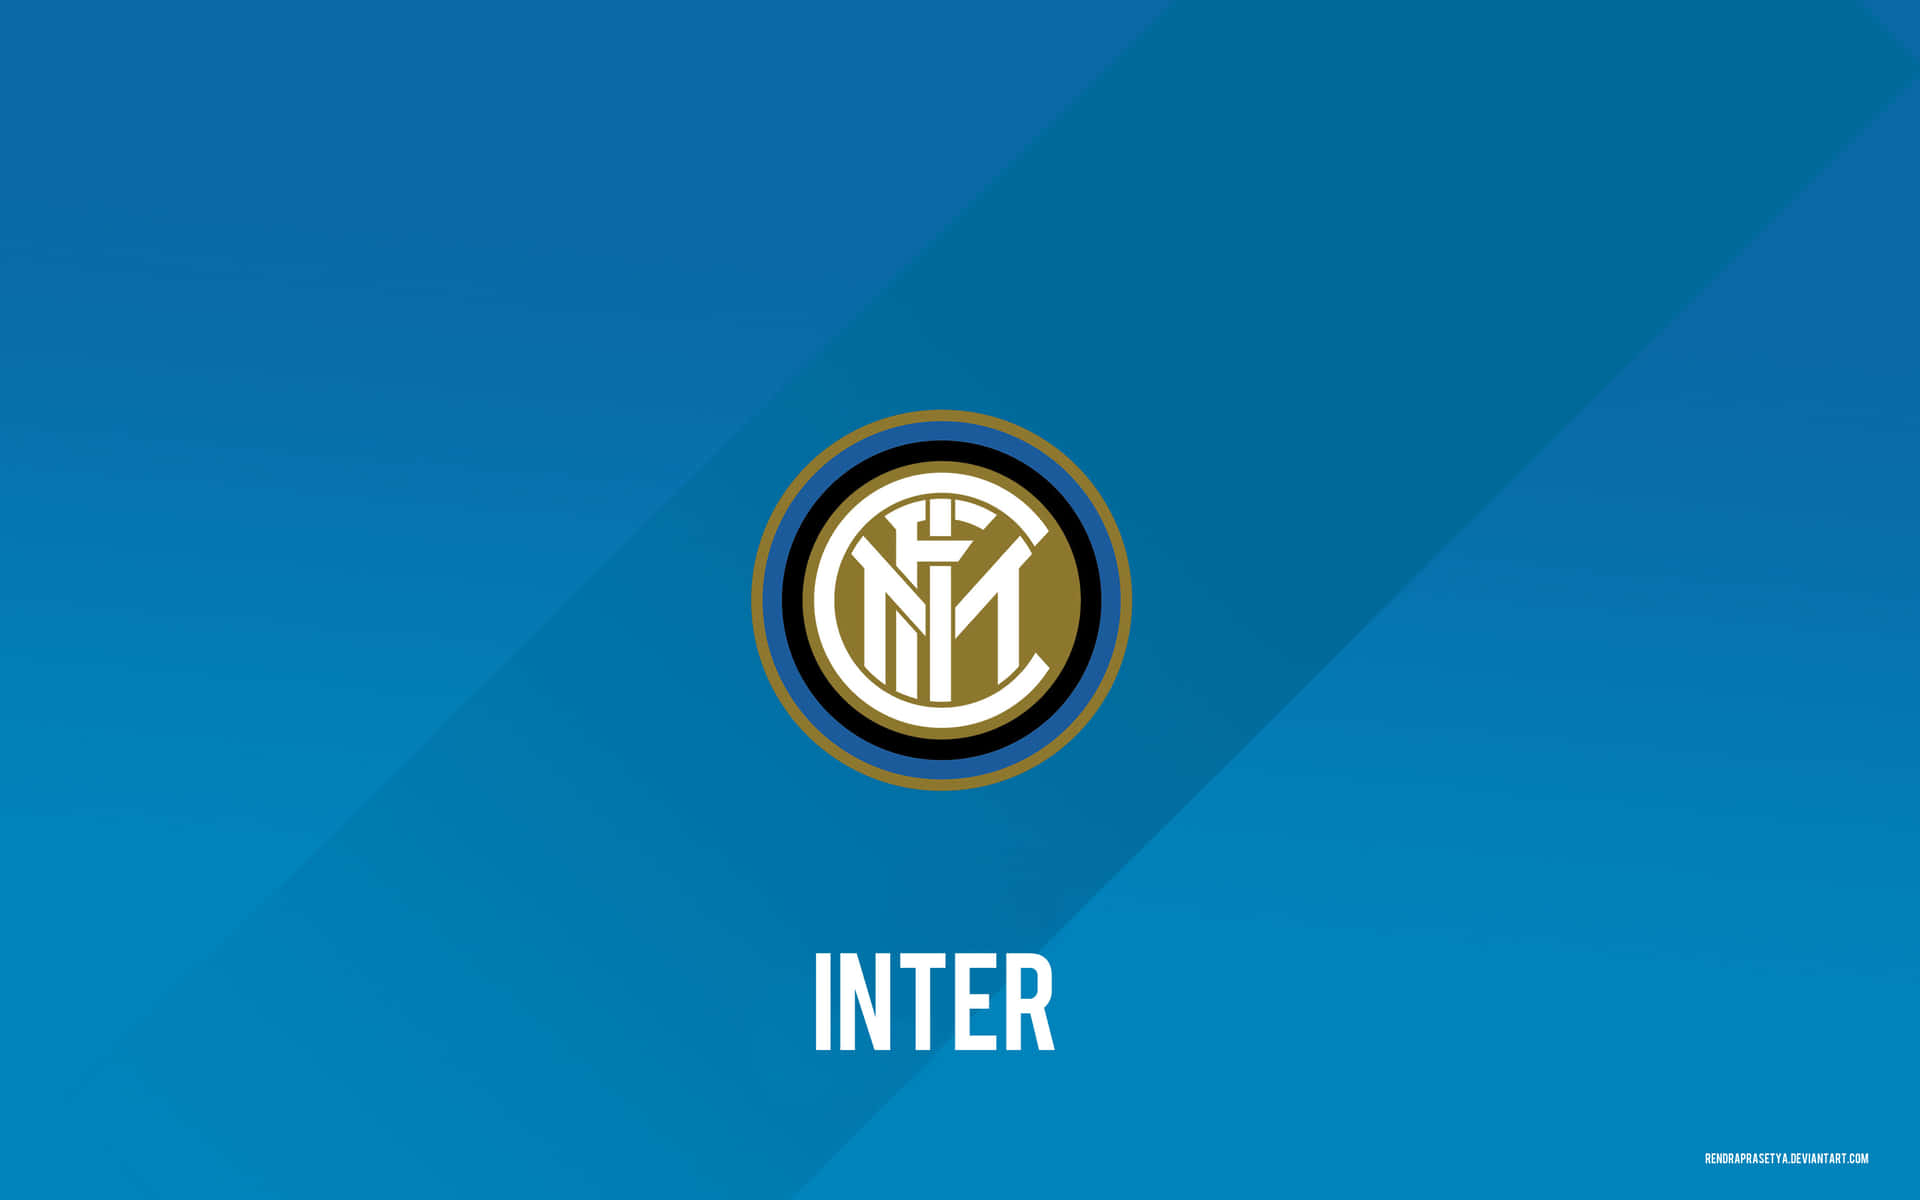 Download Inter Milan wallpapers for mobile phone free Inter Milan HD  pictures